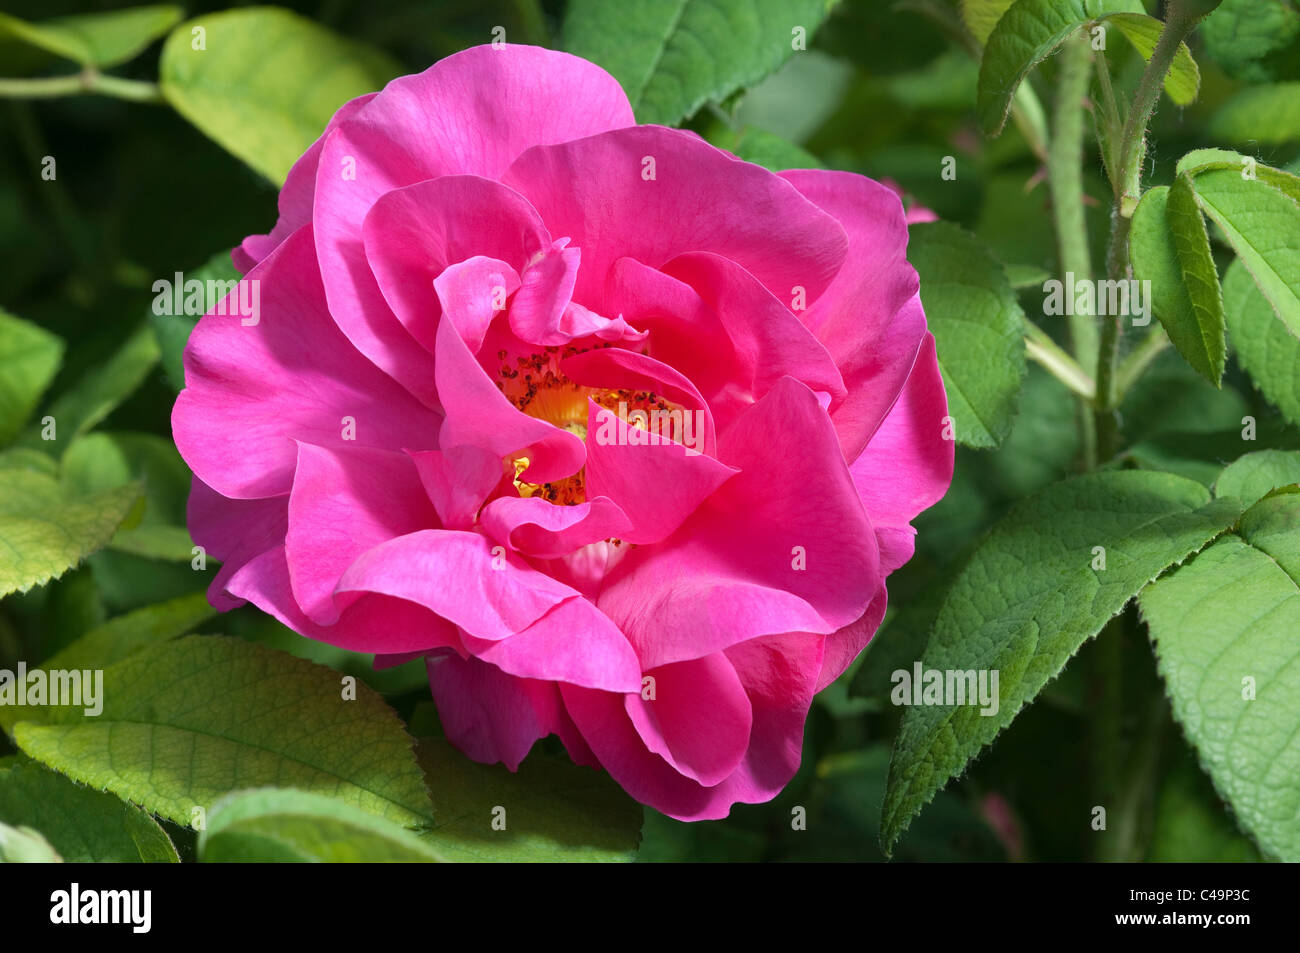 Apothecarys Rose (Rosa Gallica Officinalis) blüht. Stockfoto